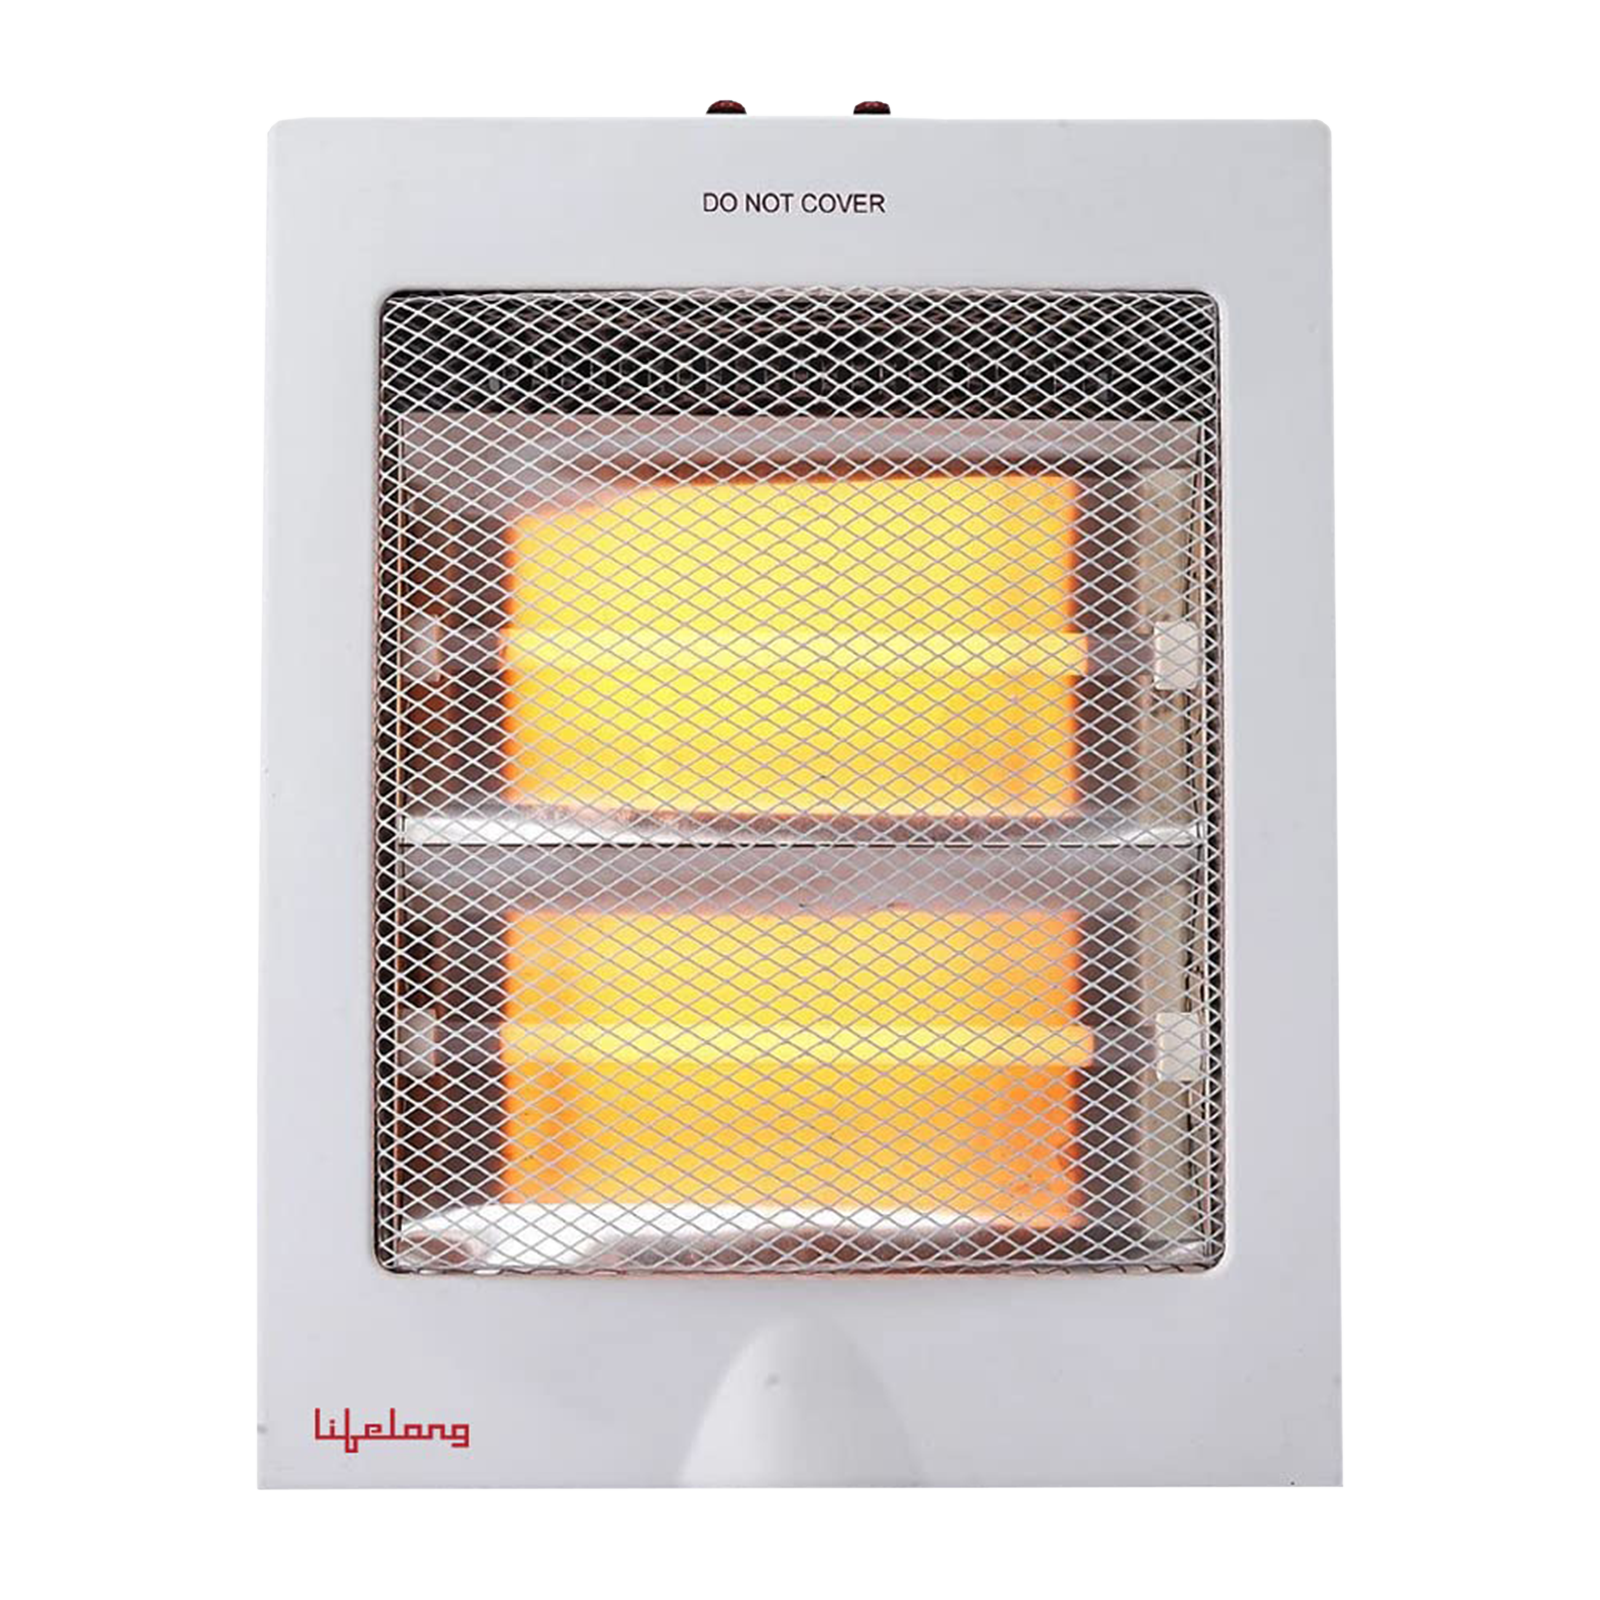 Lifelong Regalia 800 Watts Quartz Room Heater (Over Heat Protection, LLQH922, White)_1